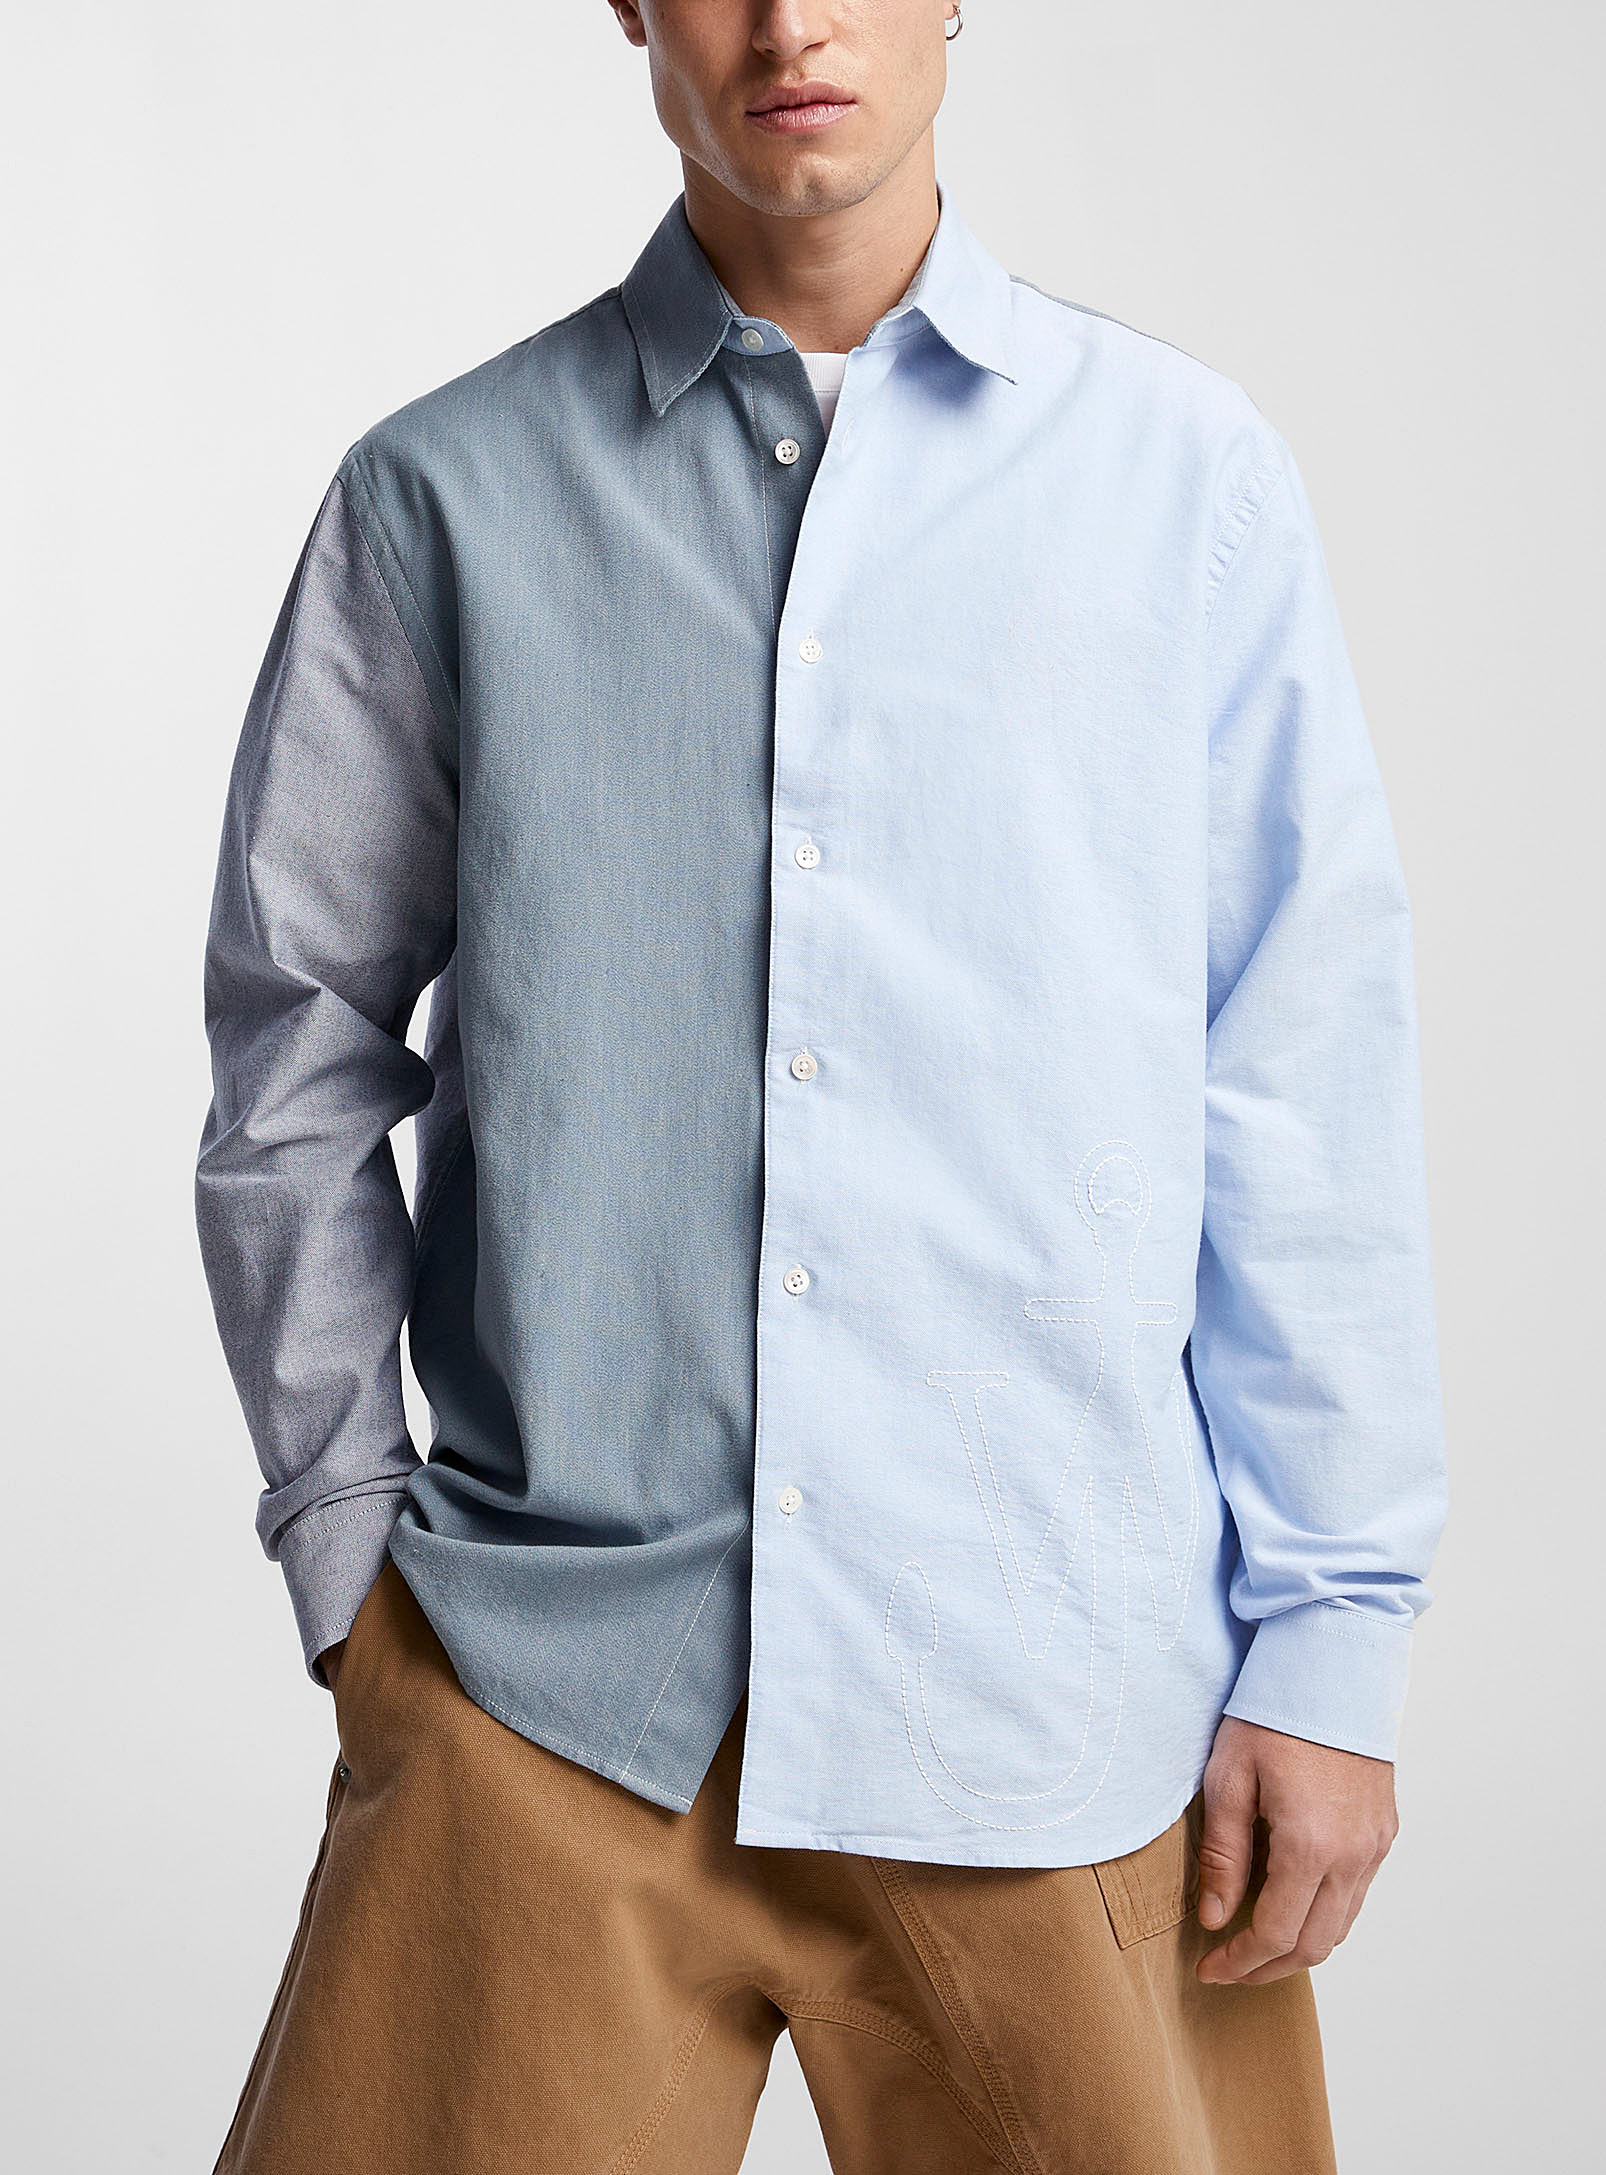 JW Anderson - Men's Patchwork blend Oxford shirt